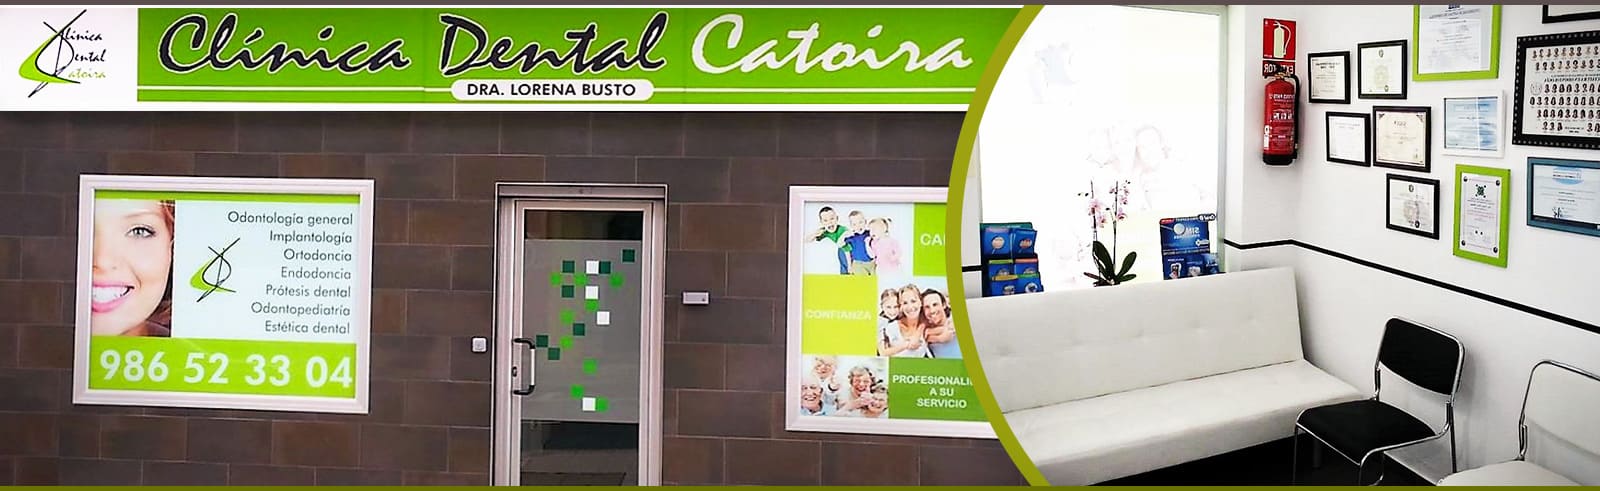 Clínica Dental Catoira Dra. Lorena Busto banner 1